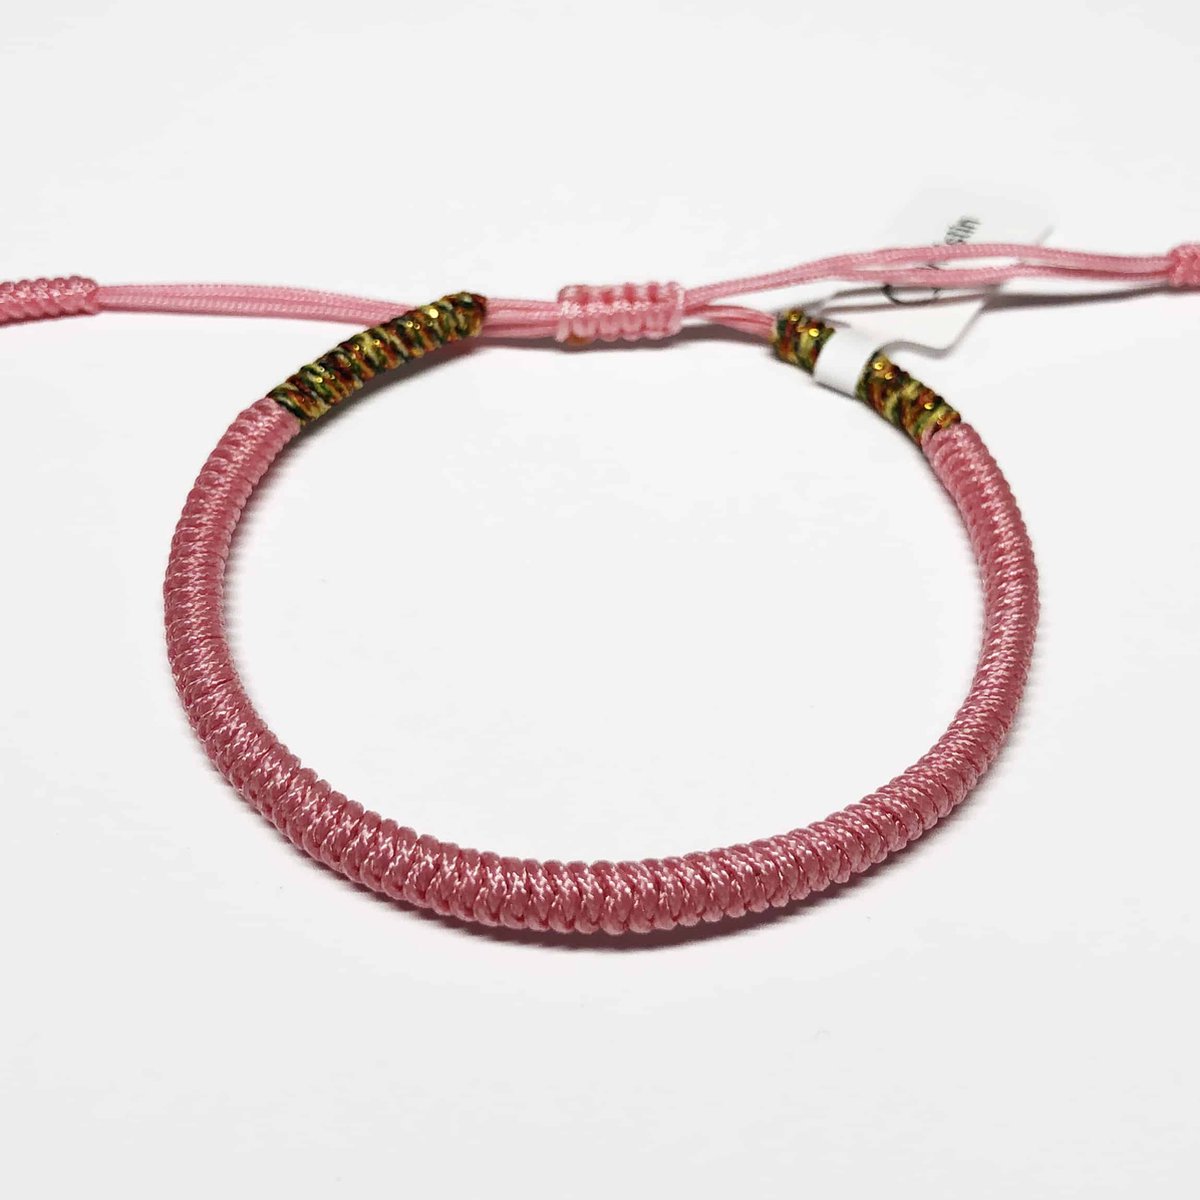 Wristin - Tibetaanse armband uiteinden lichtroze/multi